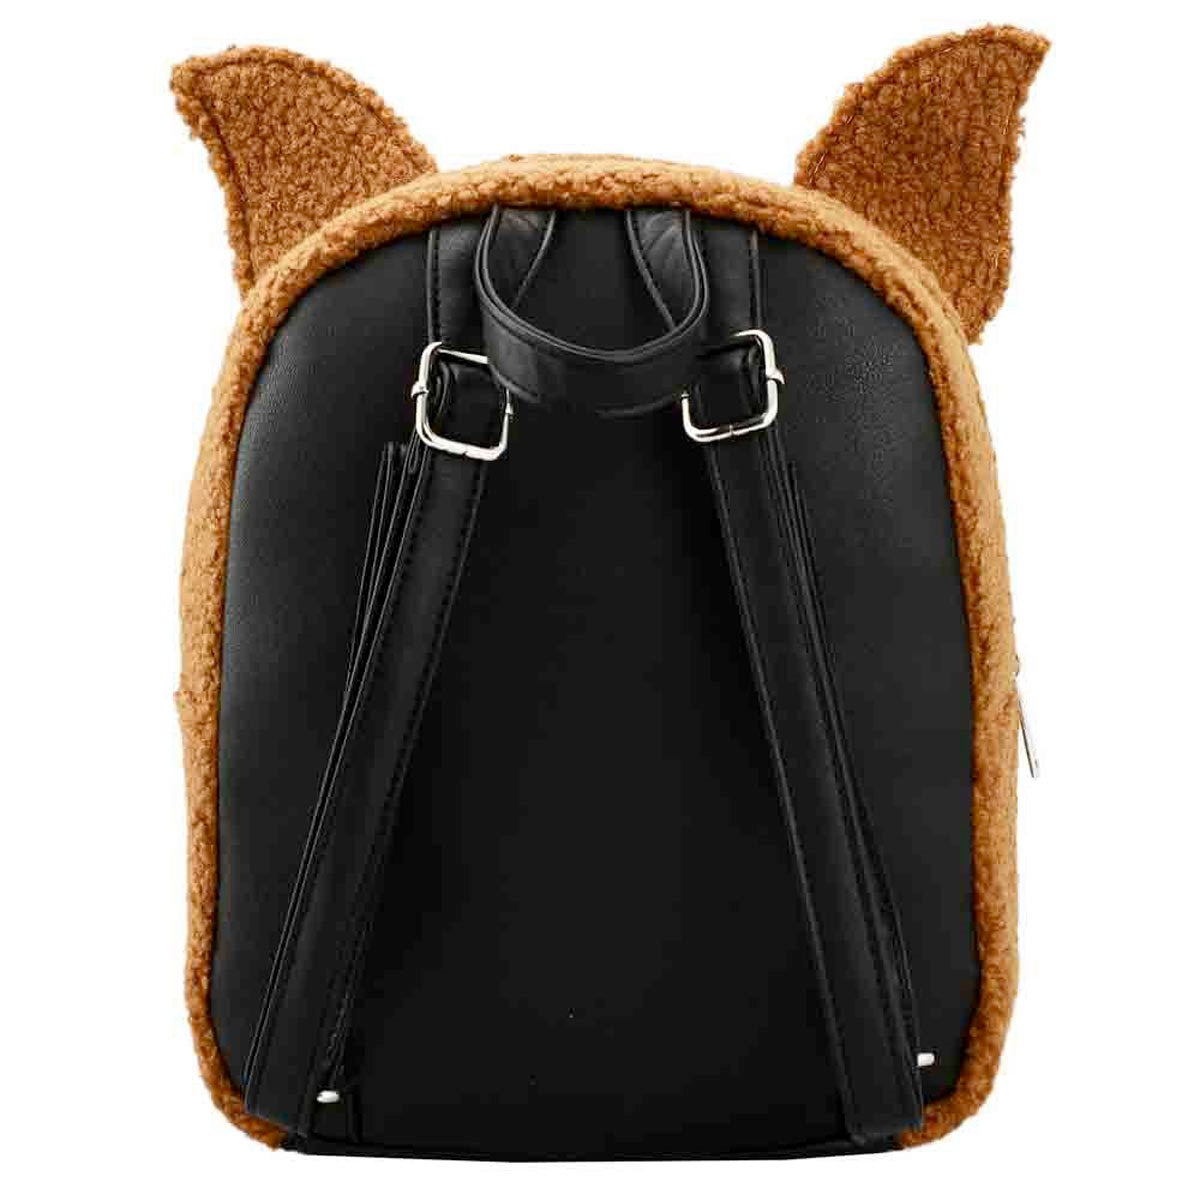 Mini Mochila Gizmo Gremlins Faux Fur 3D Mini-Backpack